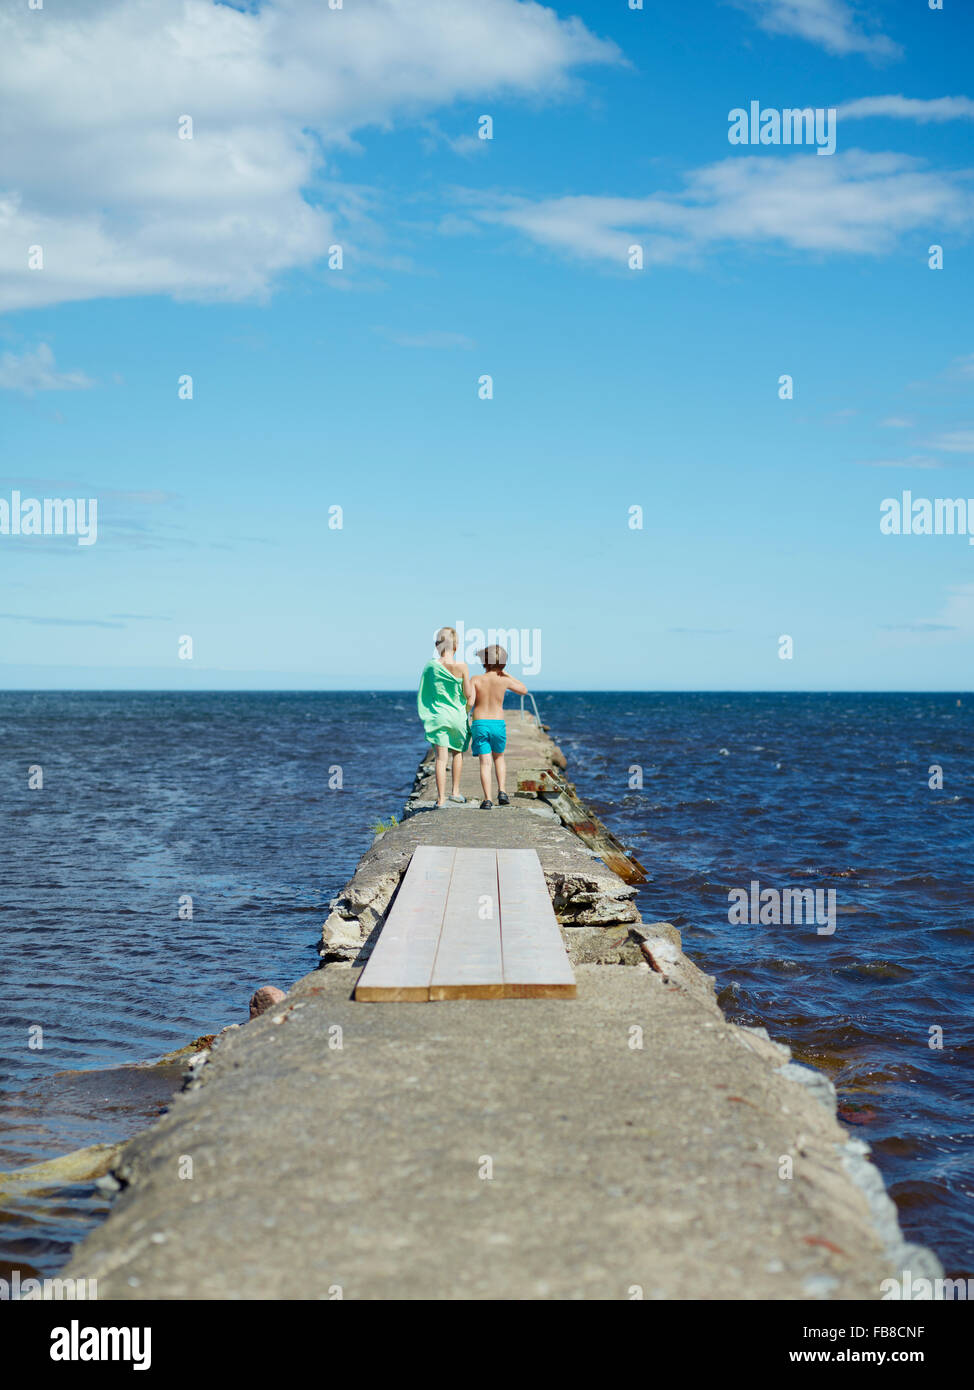 Sweden, Oland, Boys (6-7) walking on pier Stock Photo